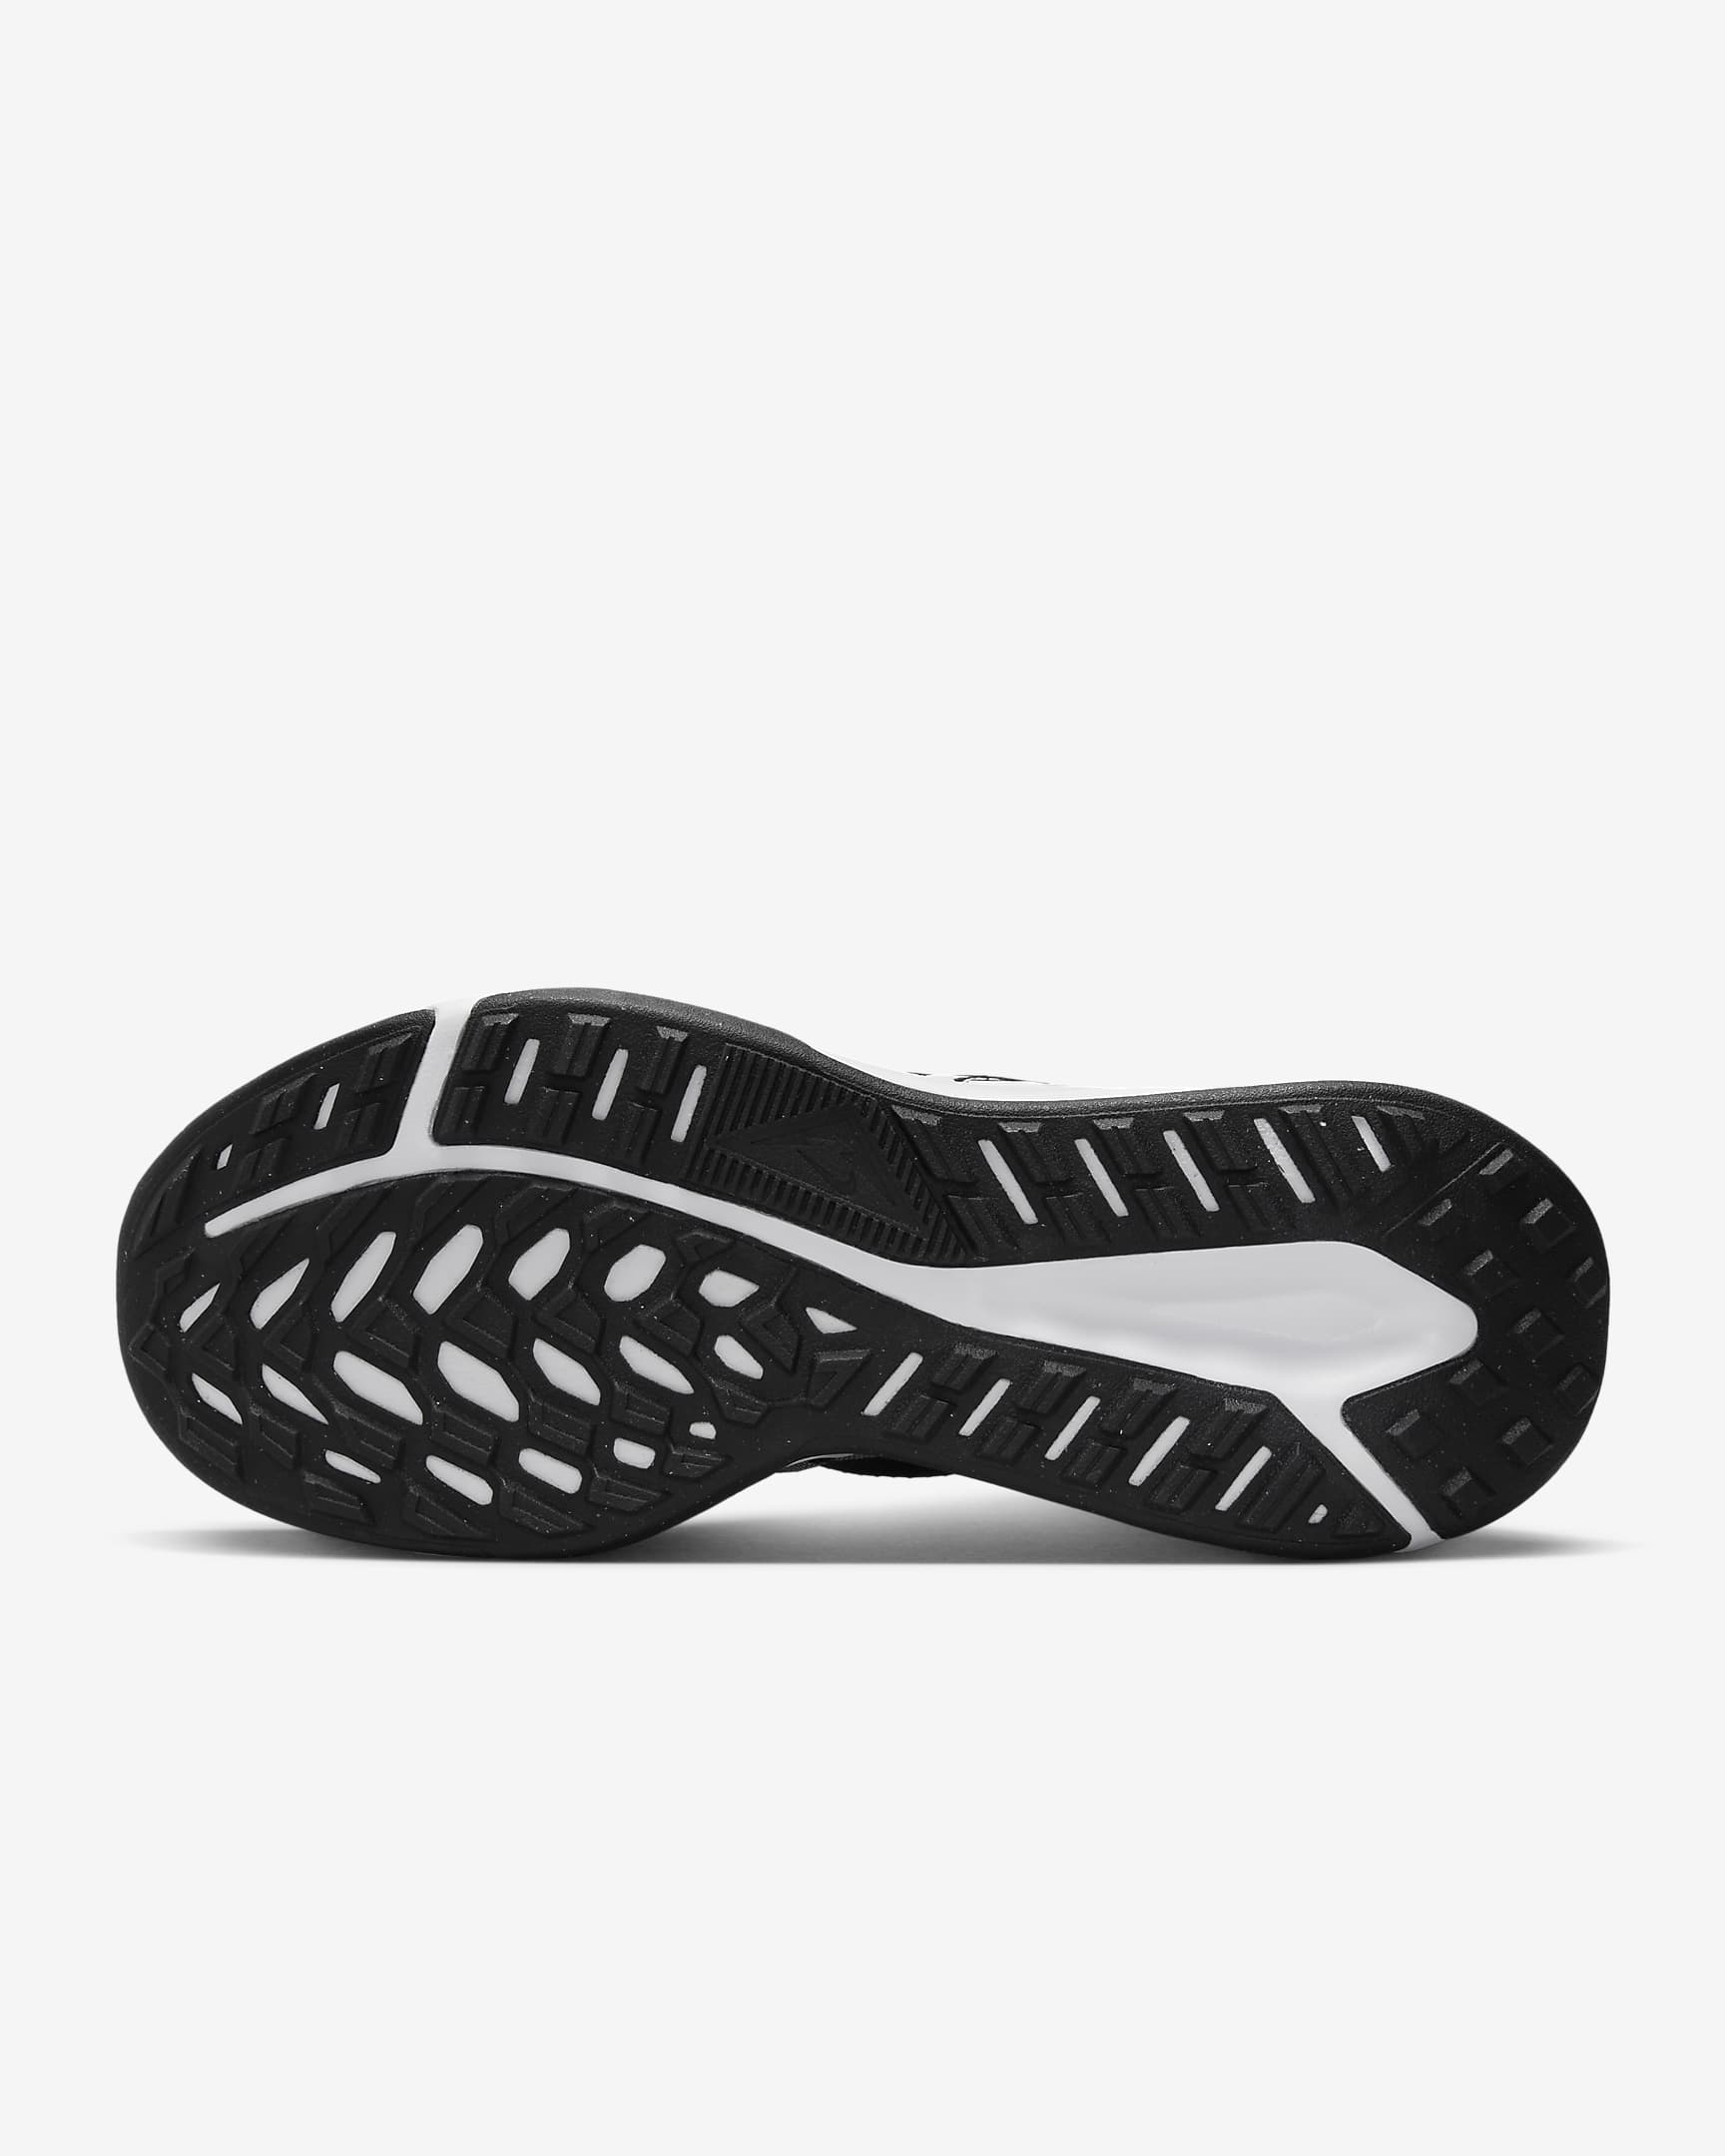 Nike Juniper Trail 2 Men's Trail Running Shoes - Black/White